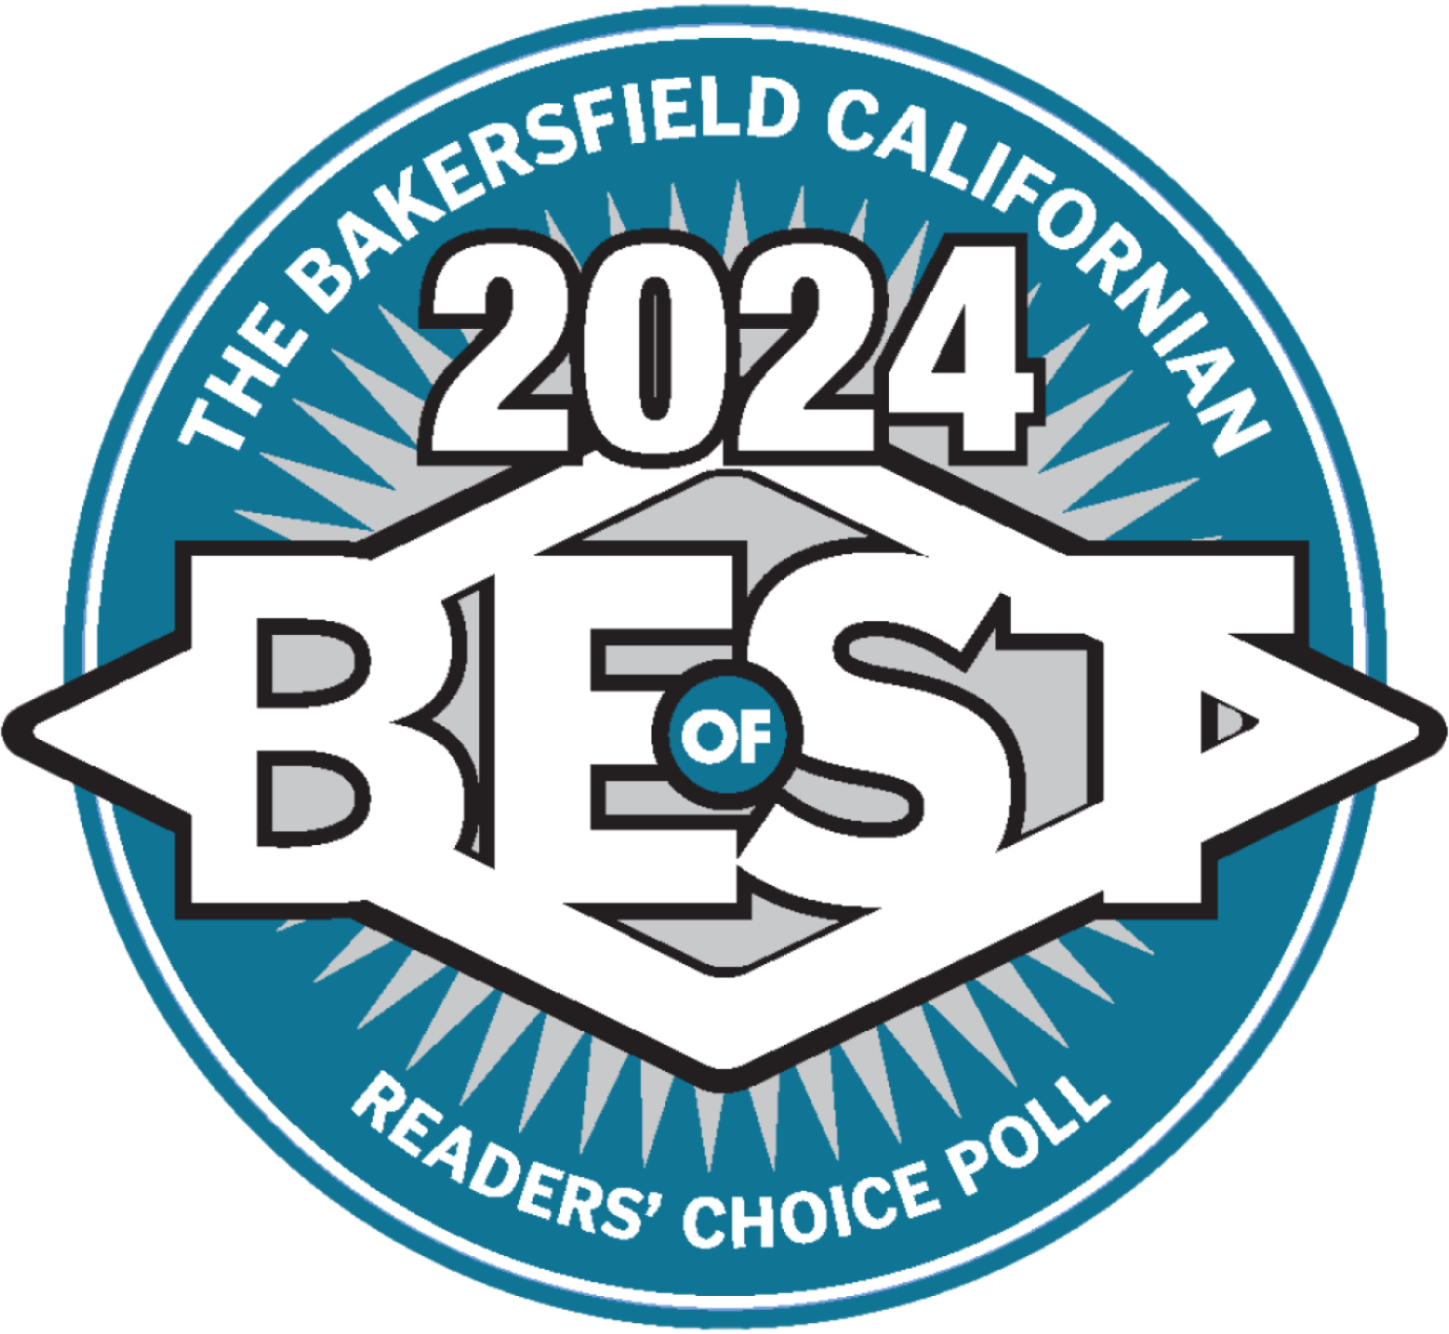 3_Bakersfield_Best_of_the_Best-removebg